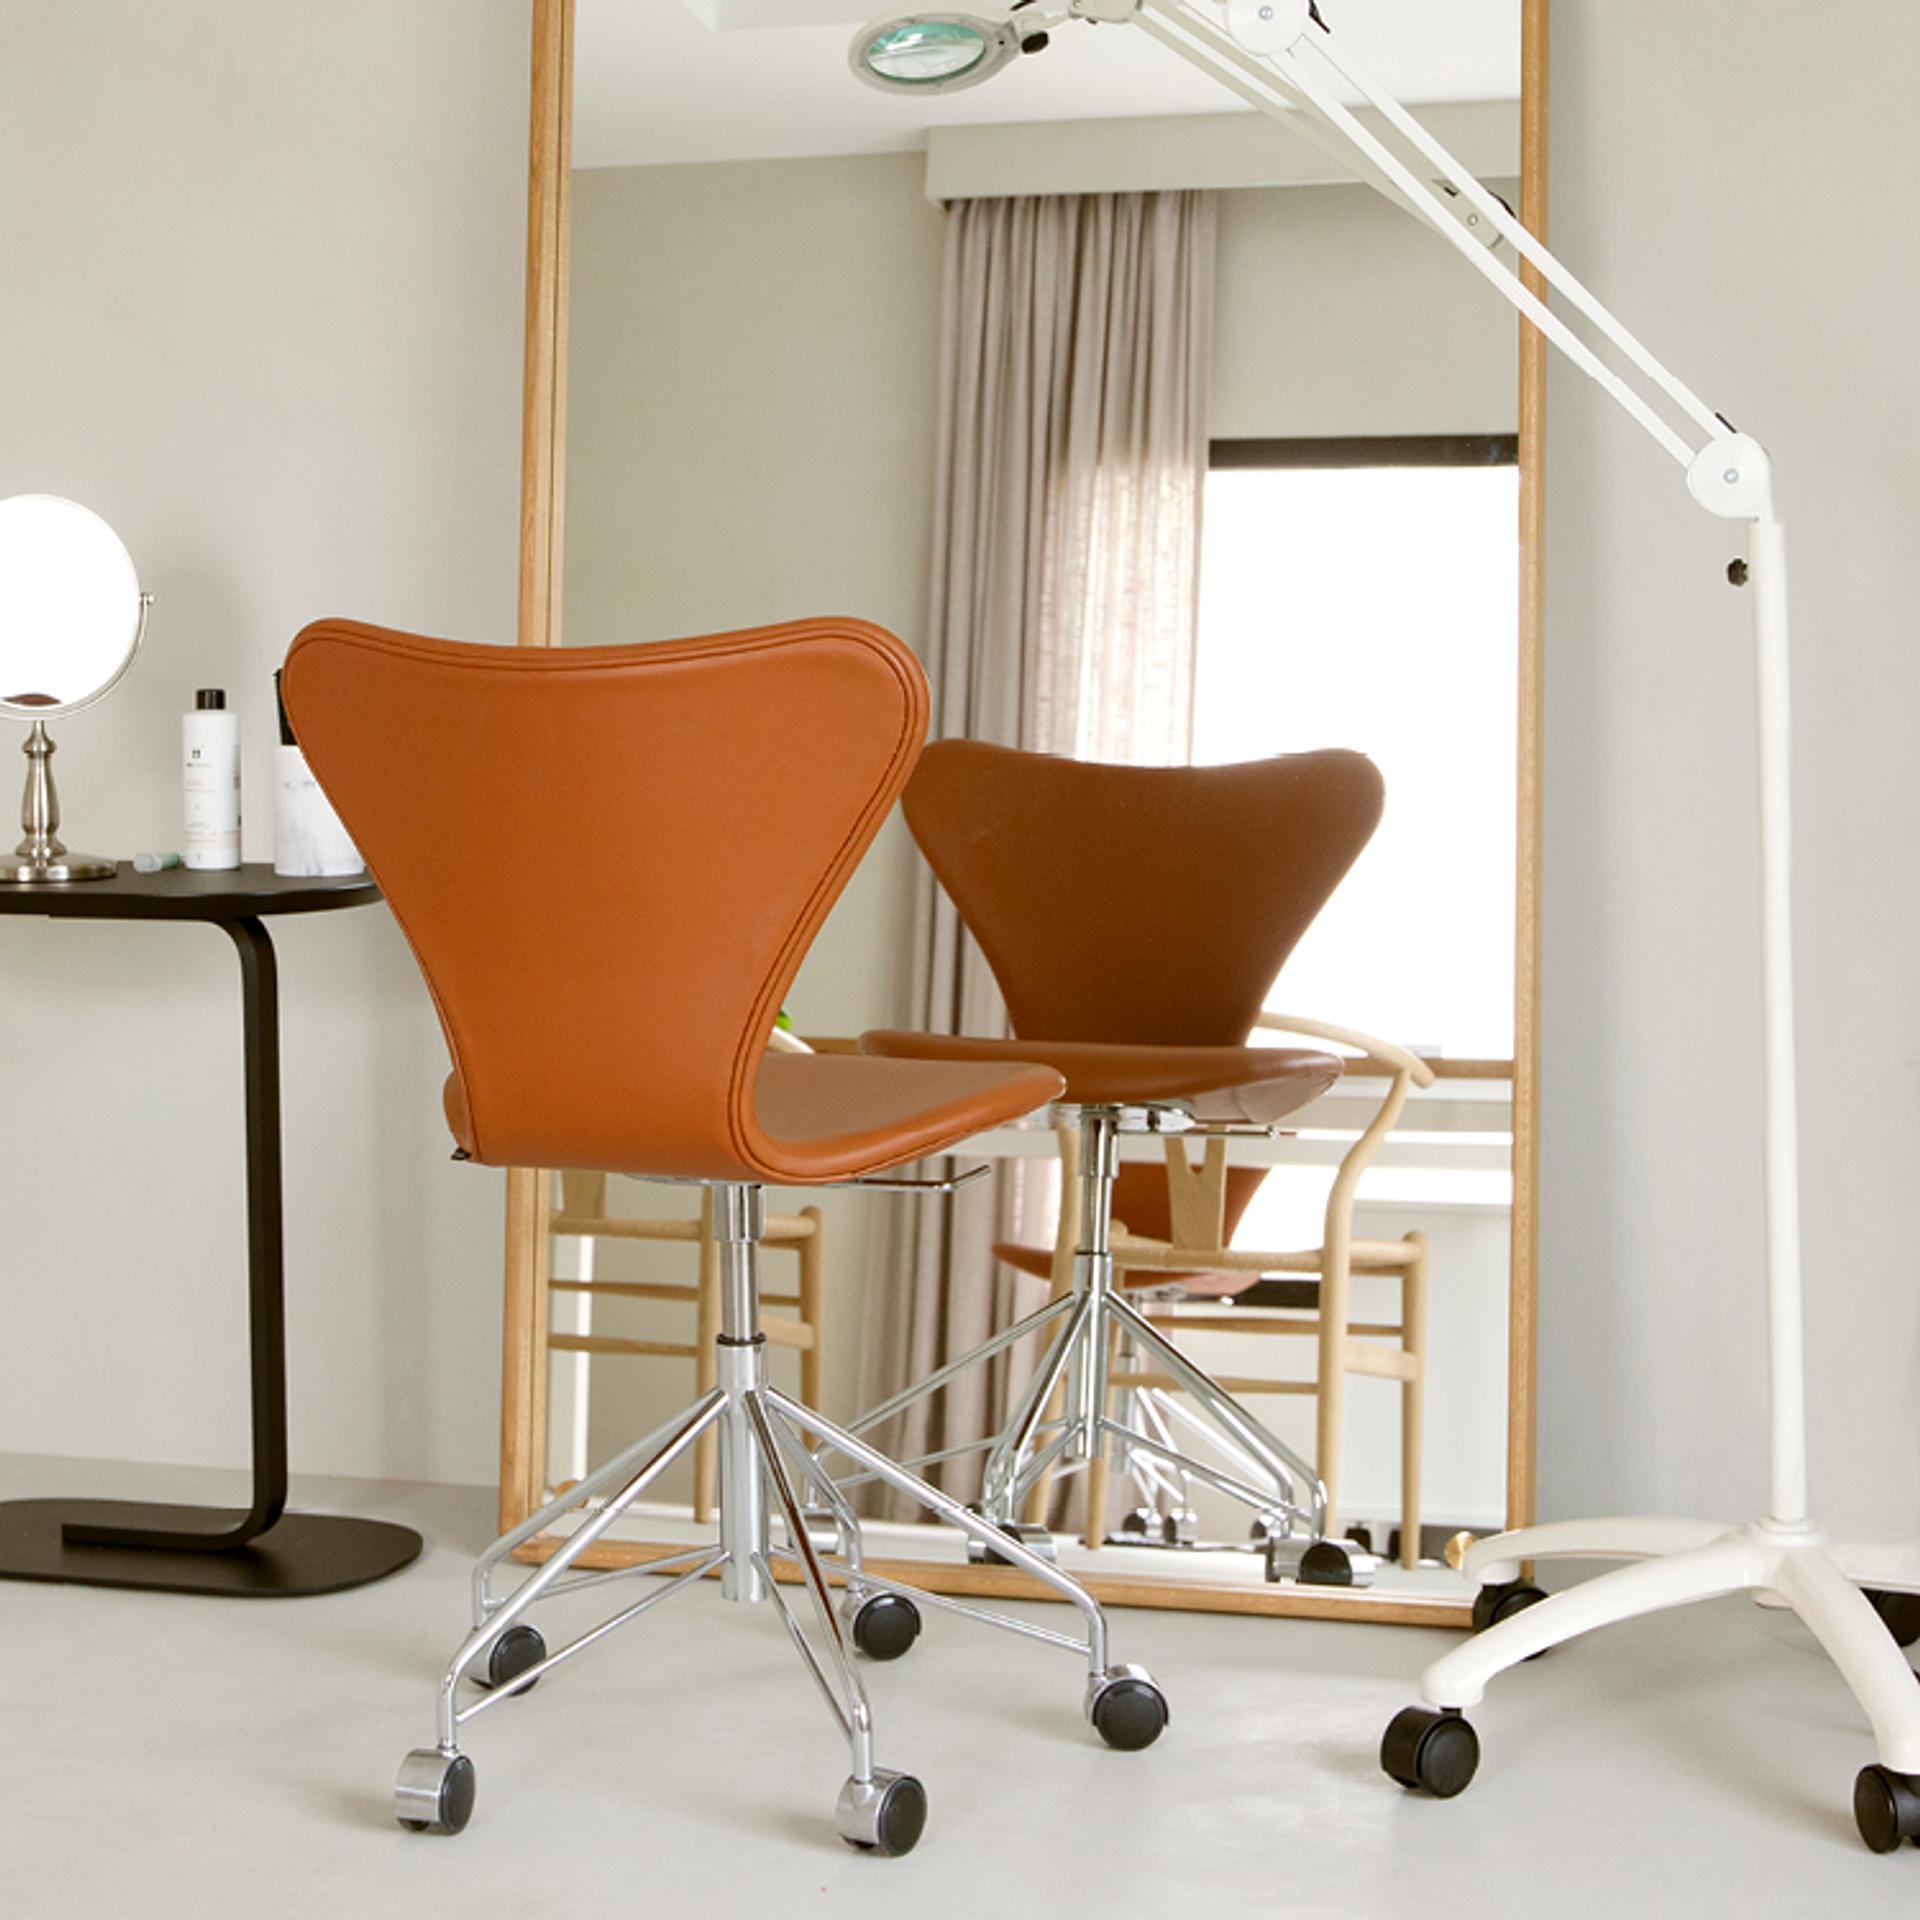 Orange swivel chair in front of full length mirror in Harklinikken Aarhus clinic